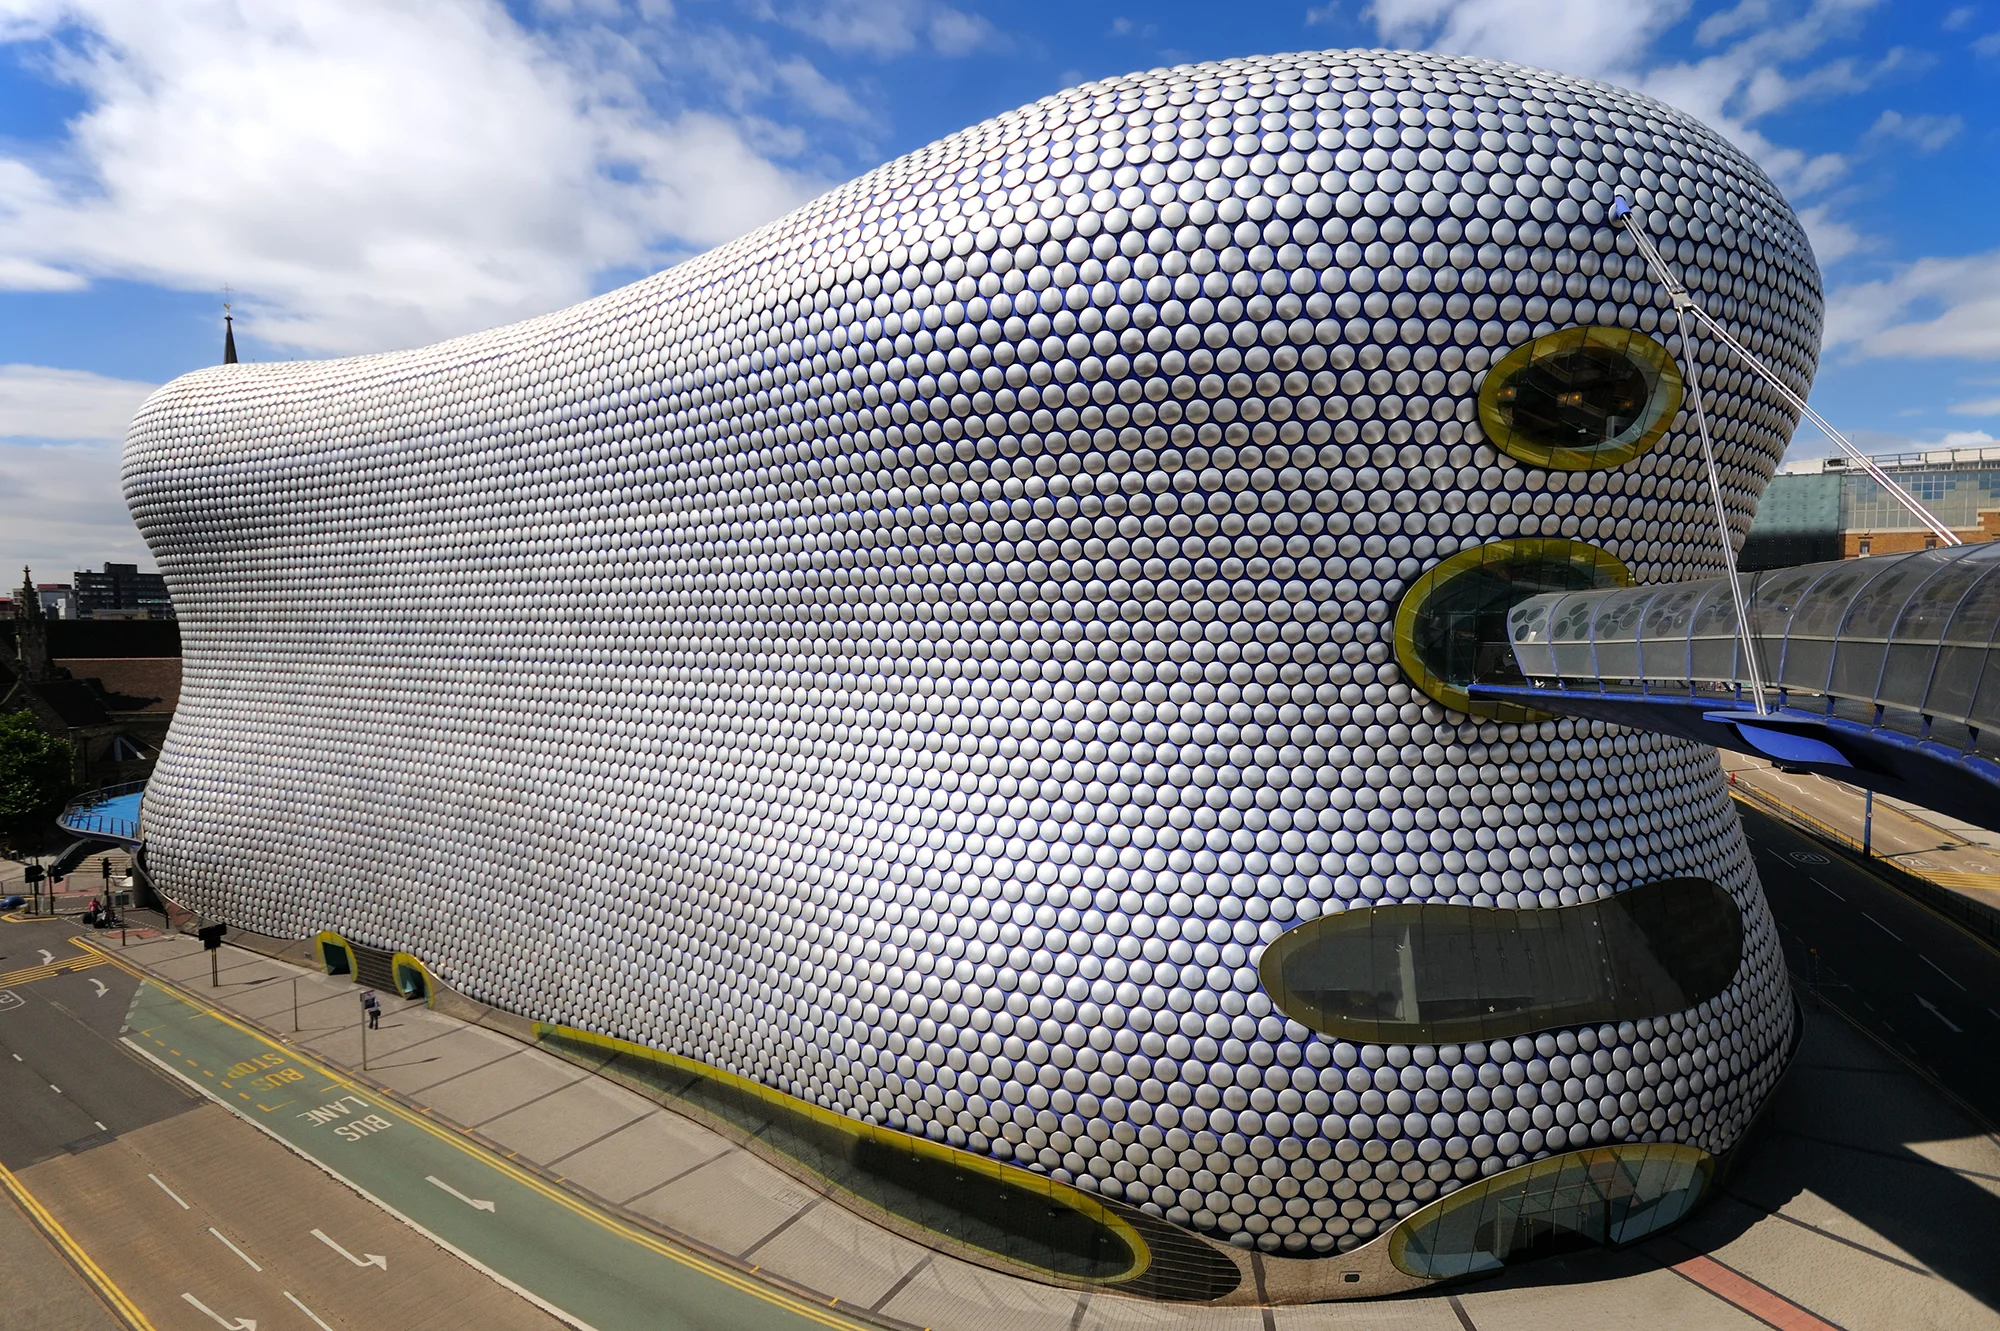 The Bullring shopping centre in Birmingham